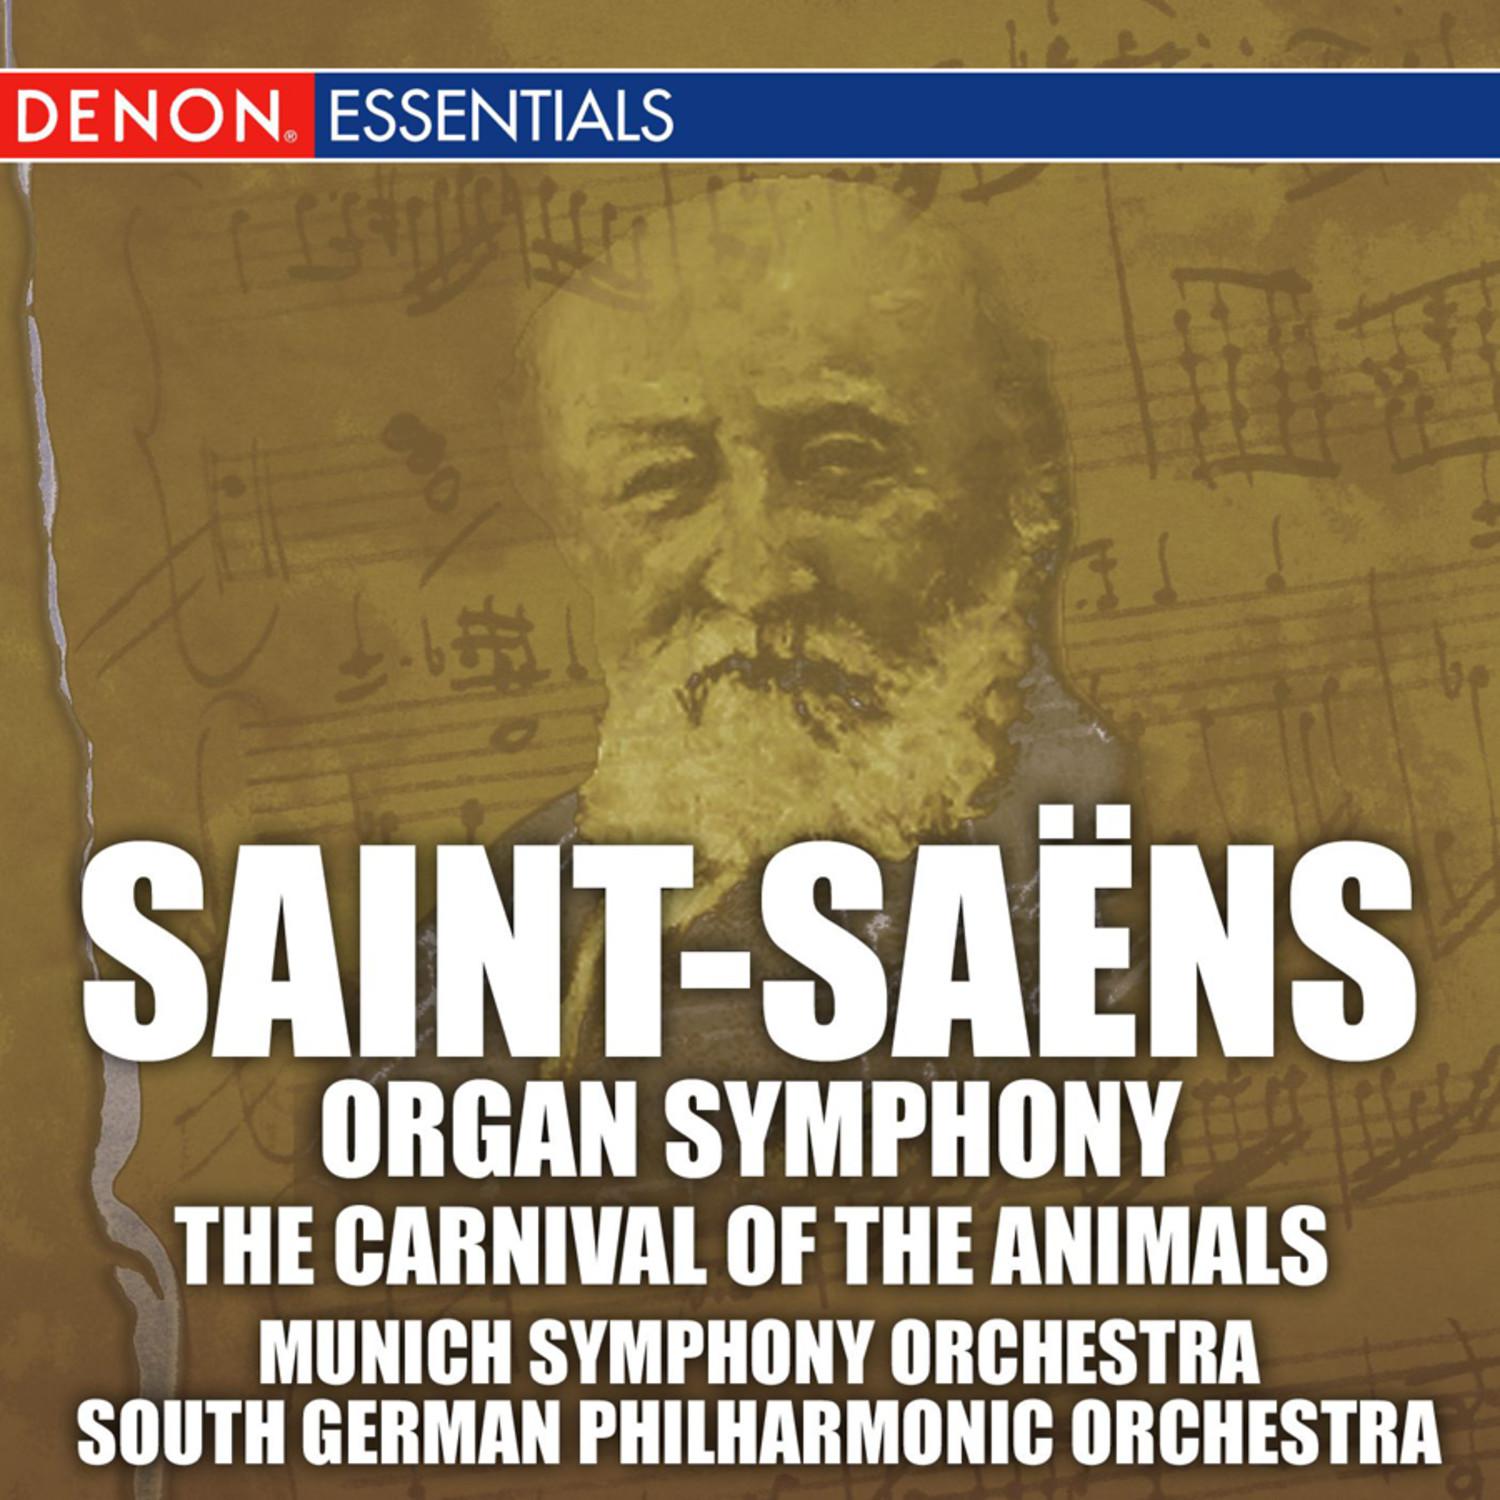 Saint-Saens: Organ Symphony & Carnival of the Animals